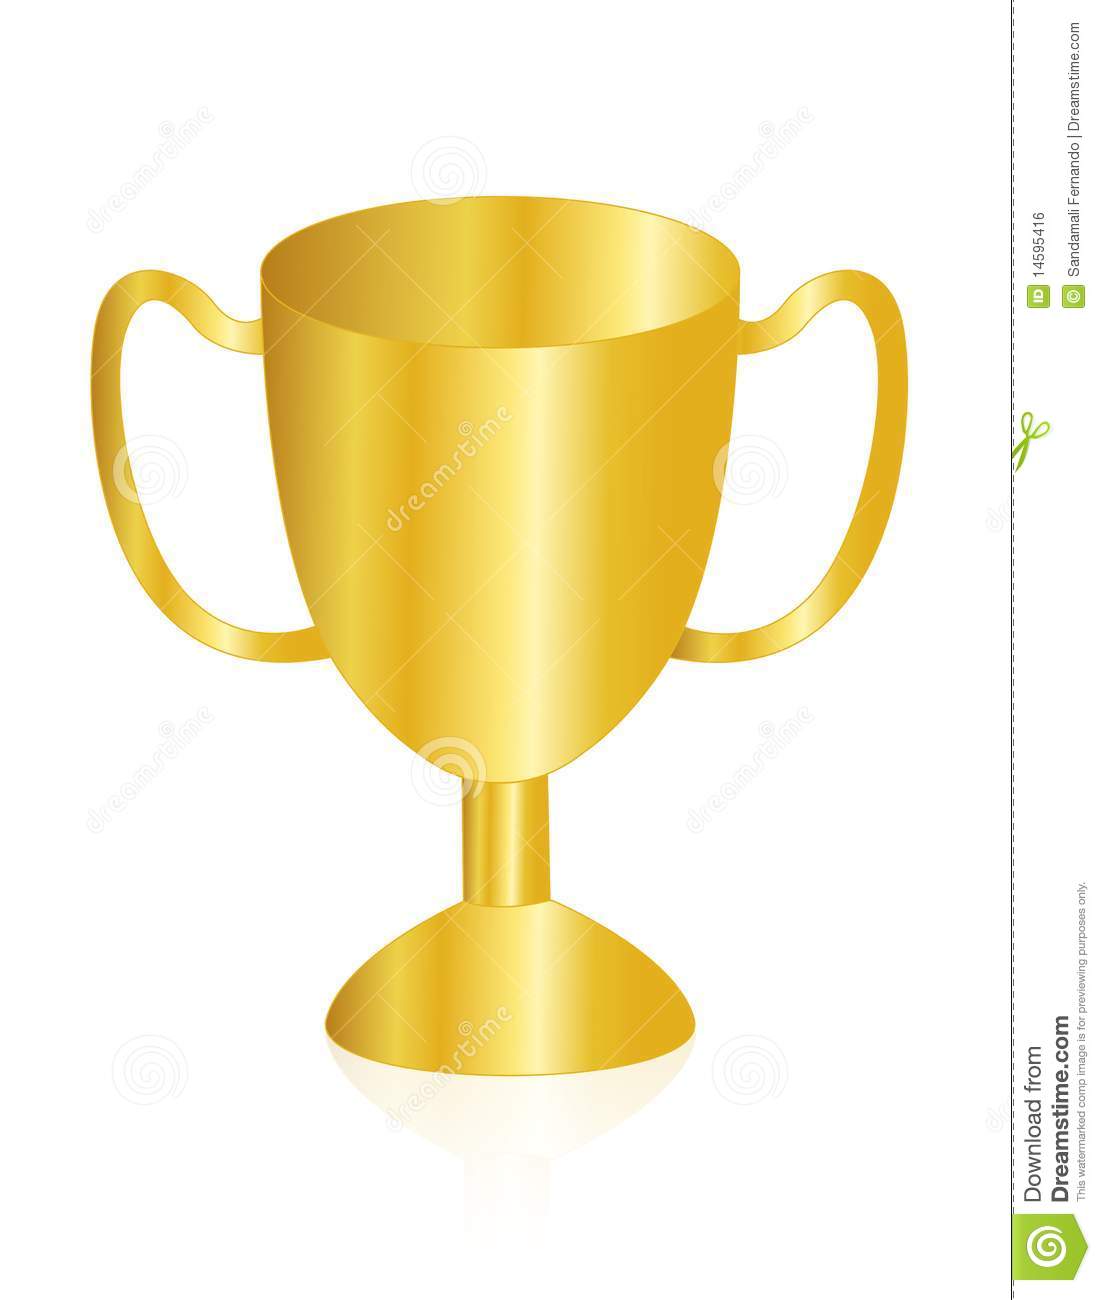 Gold Award Trophy